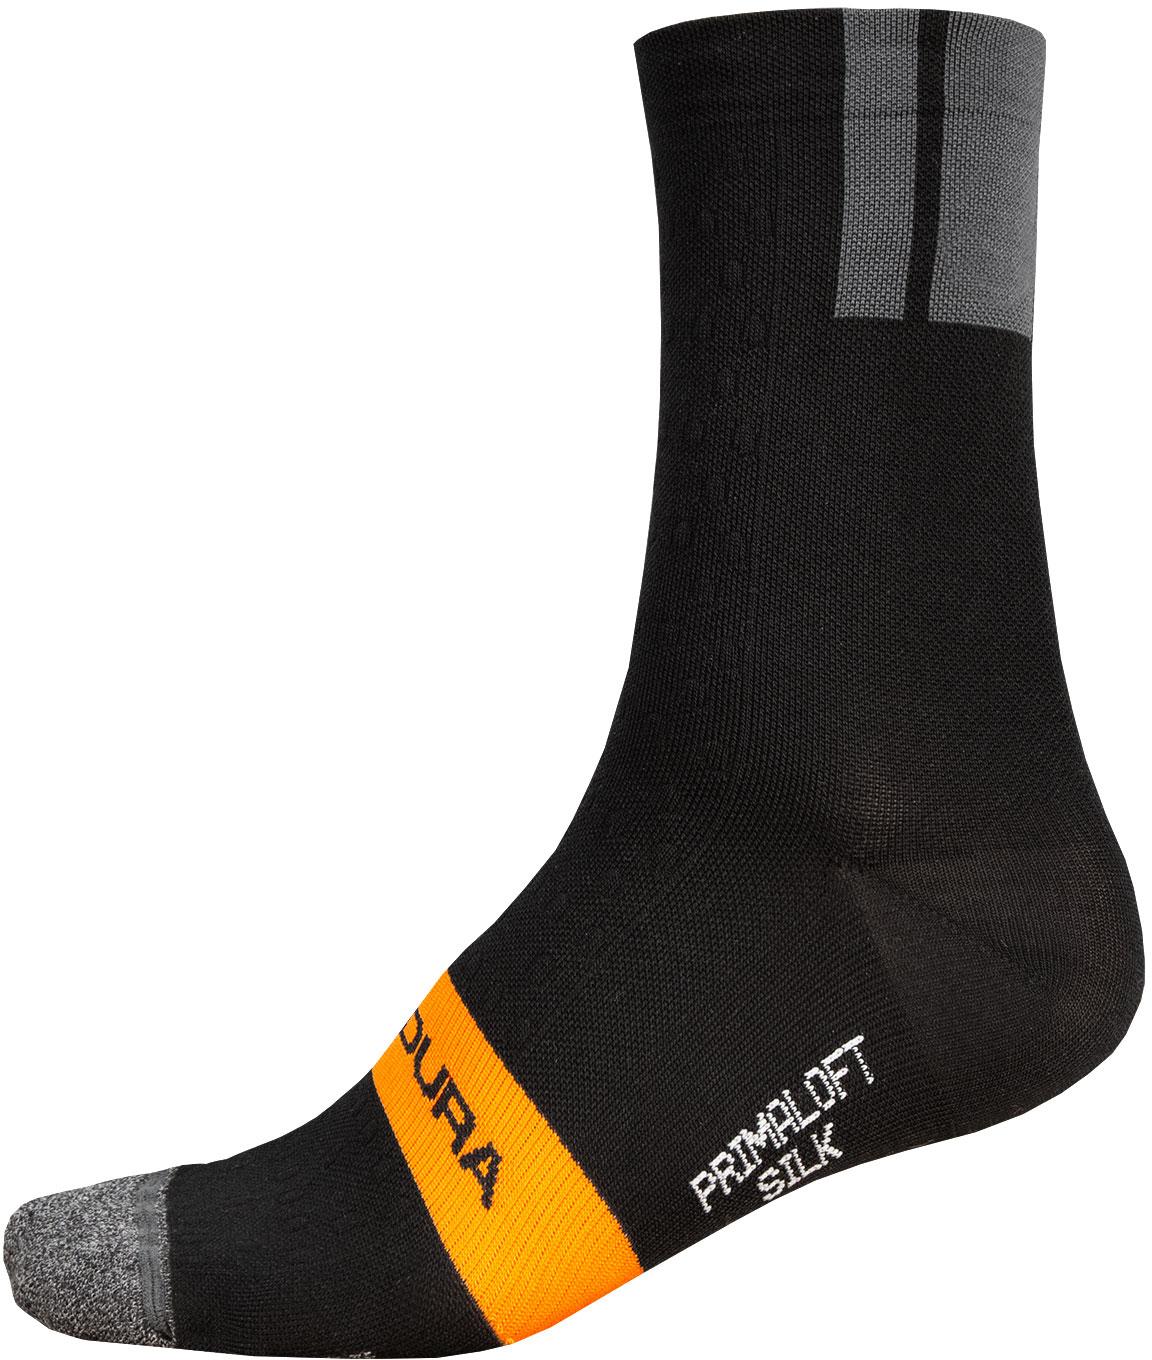 Endura Pro Sl Primaloft Socks Ii - Black